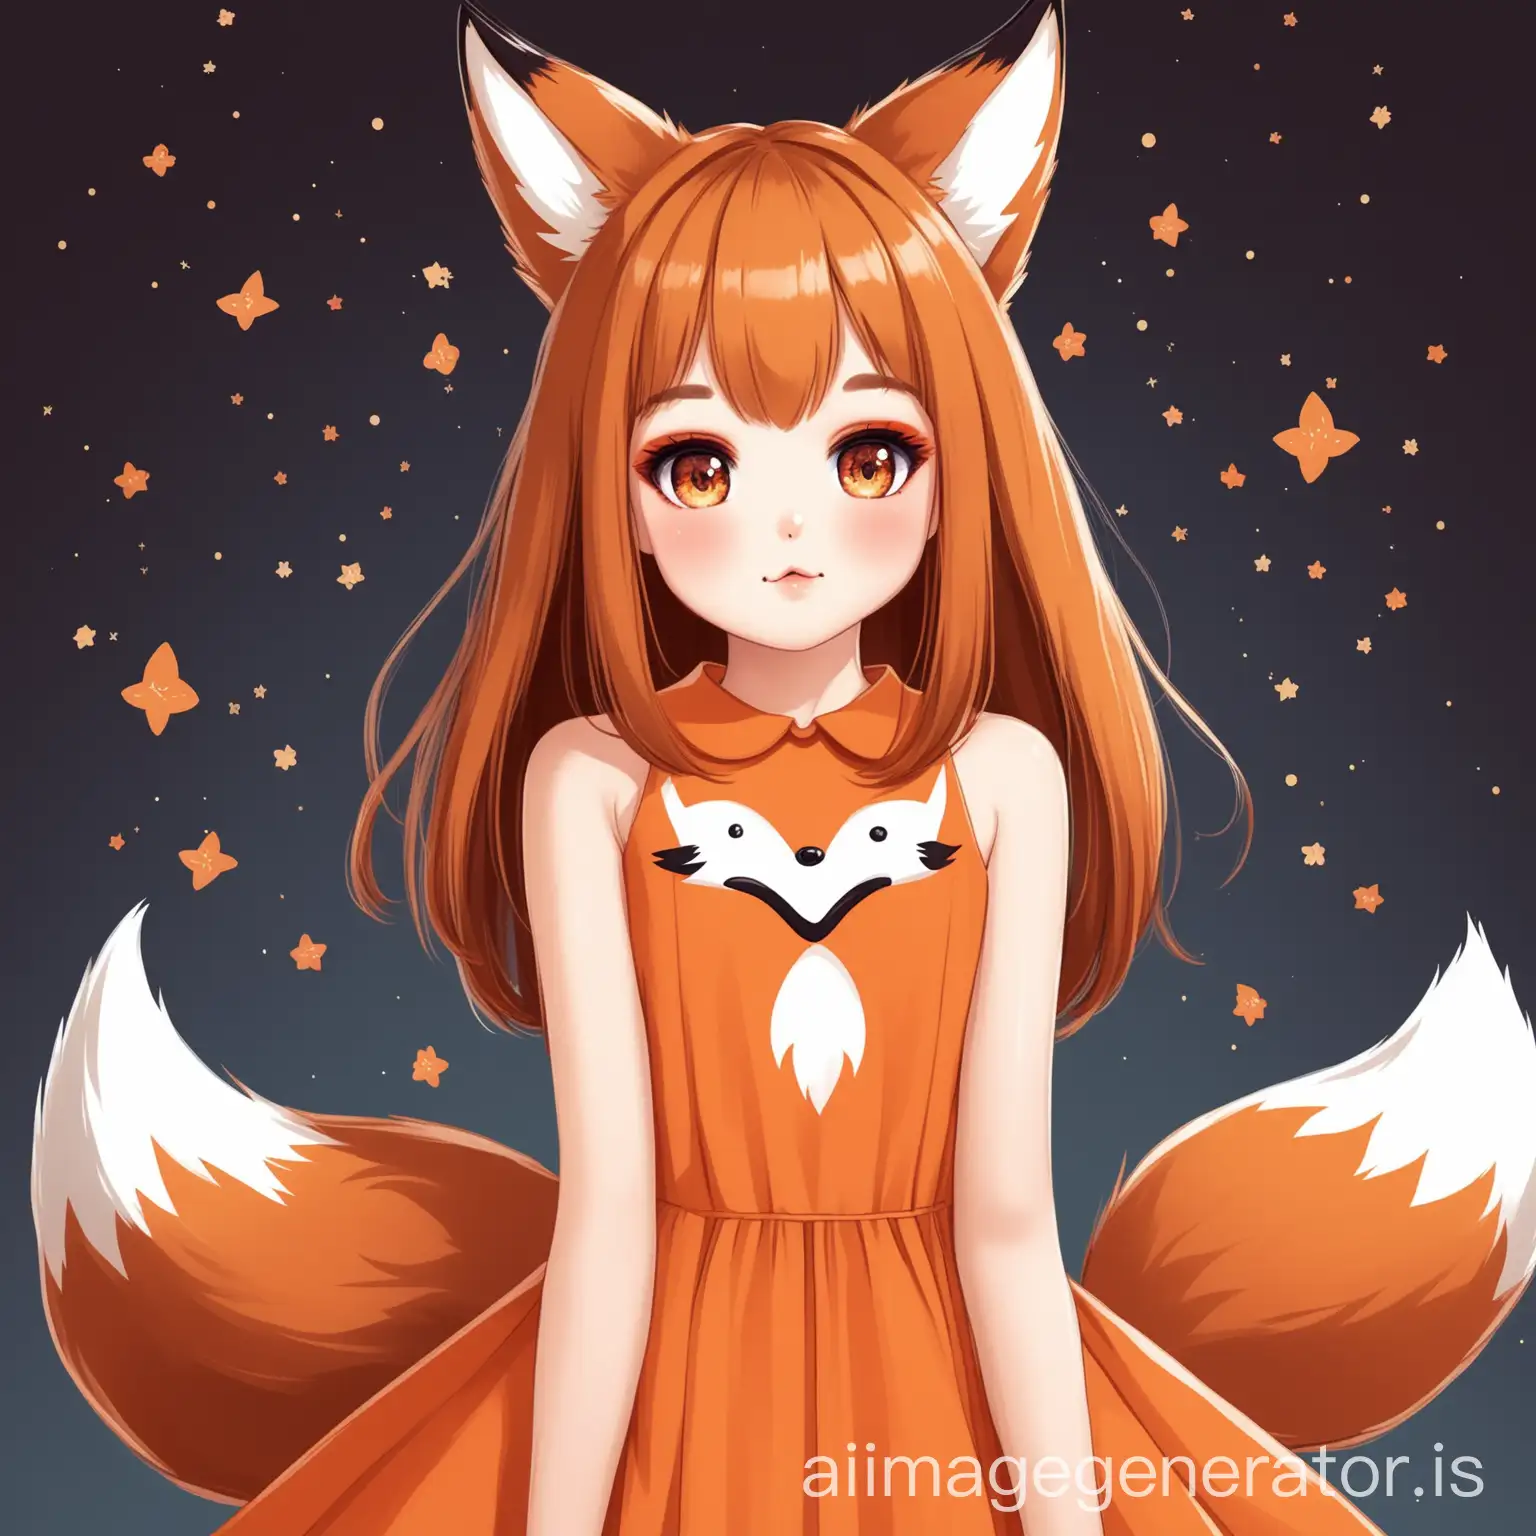 A cute girl wearing a fox inspired dress and eyeshadow